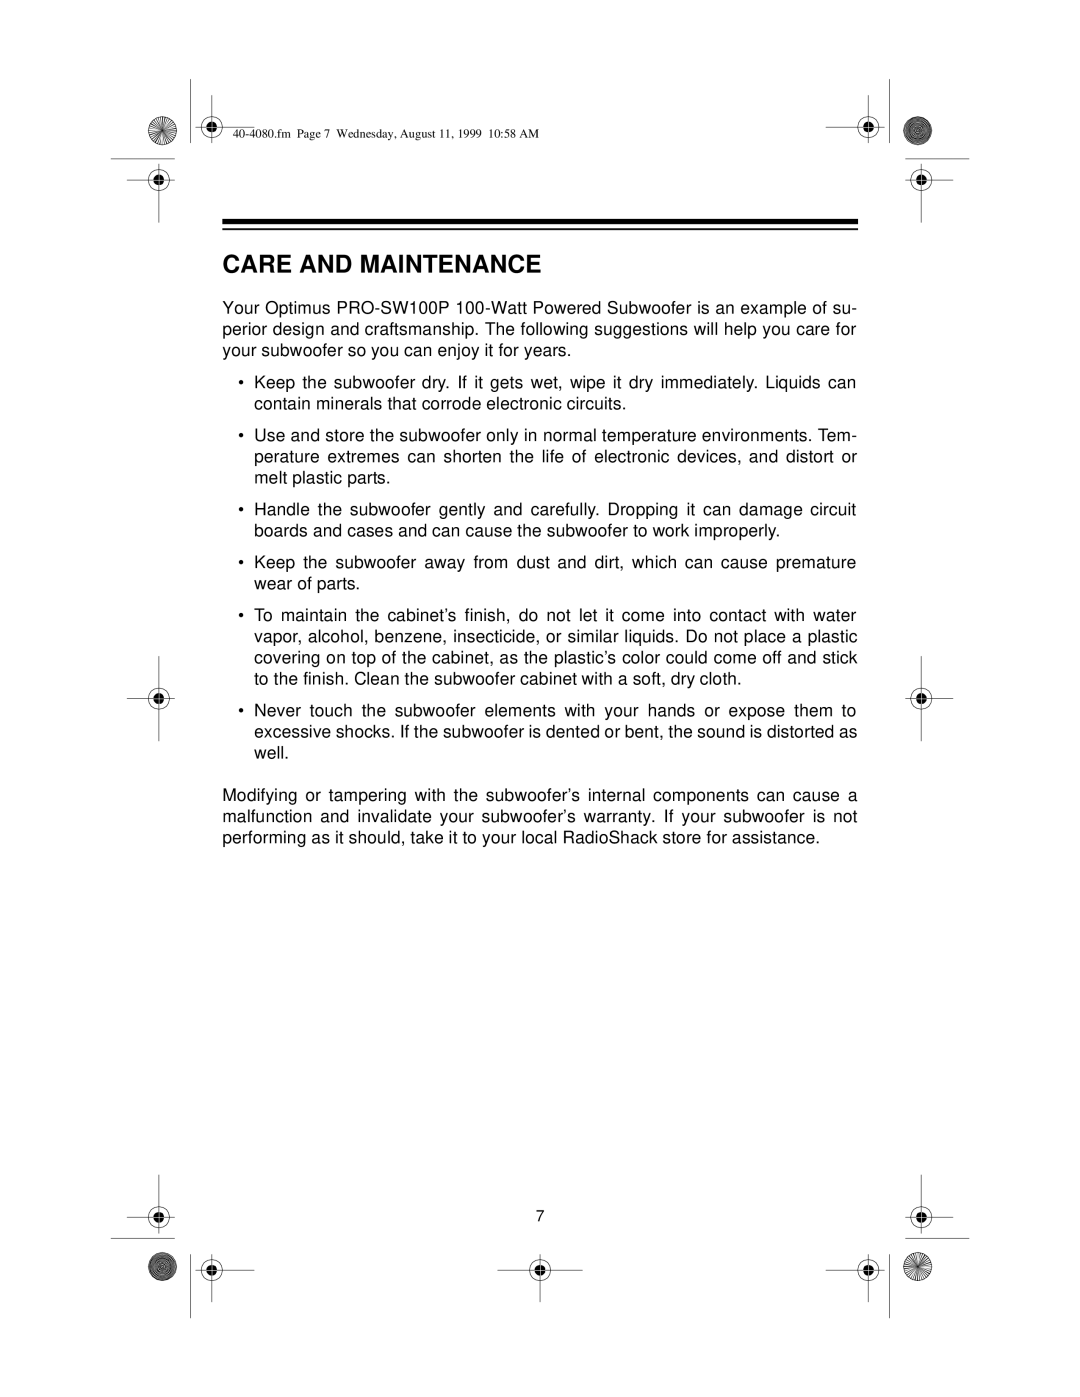 Optimus PRO-SW100P manual Care And Maintenance 